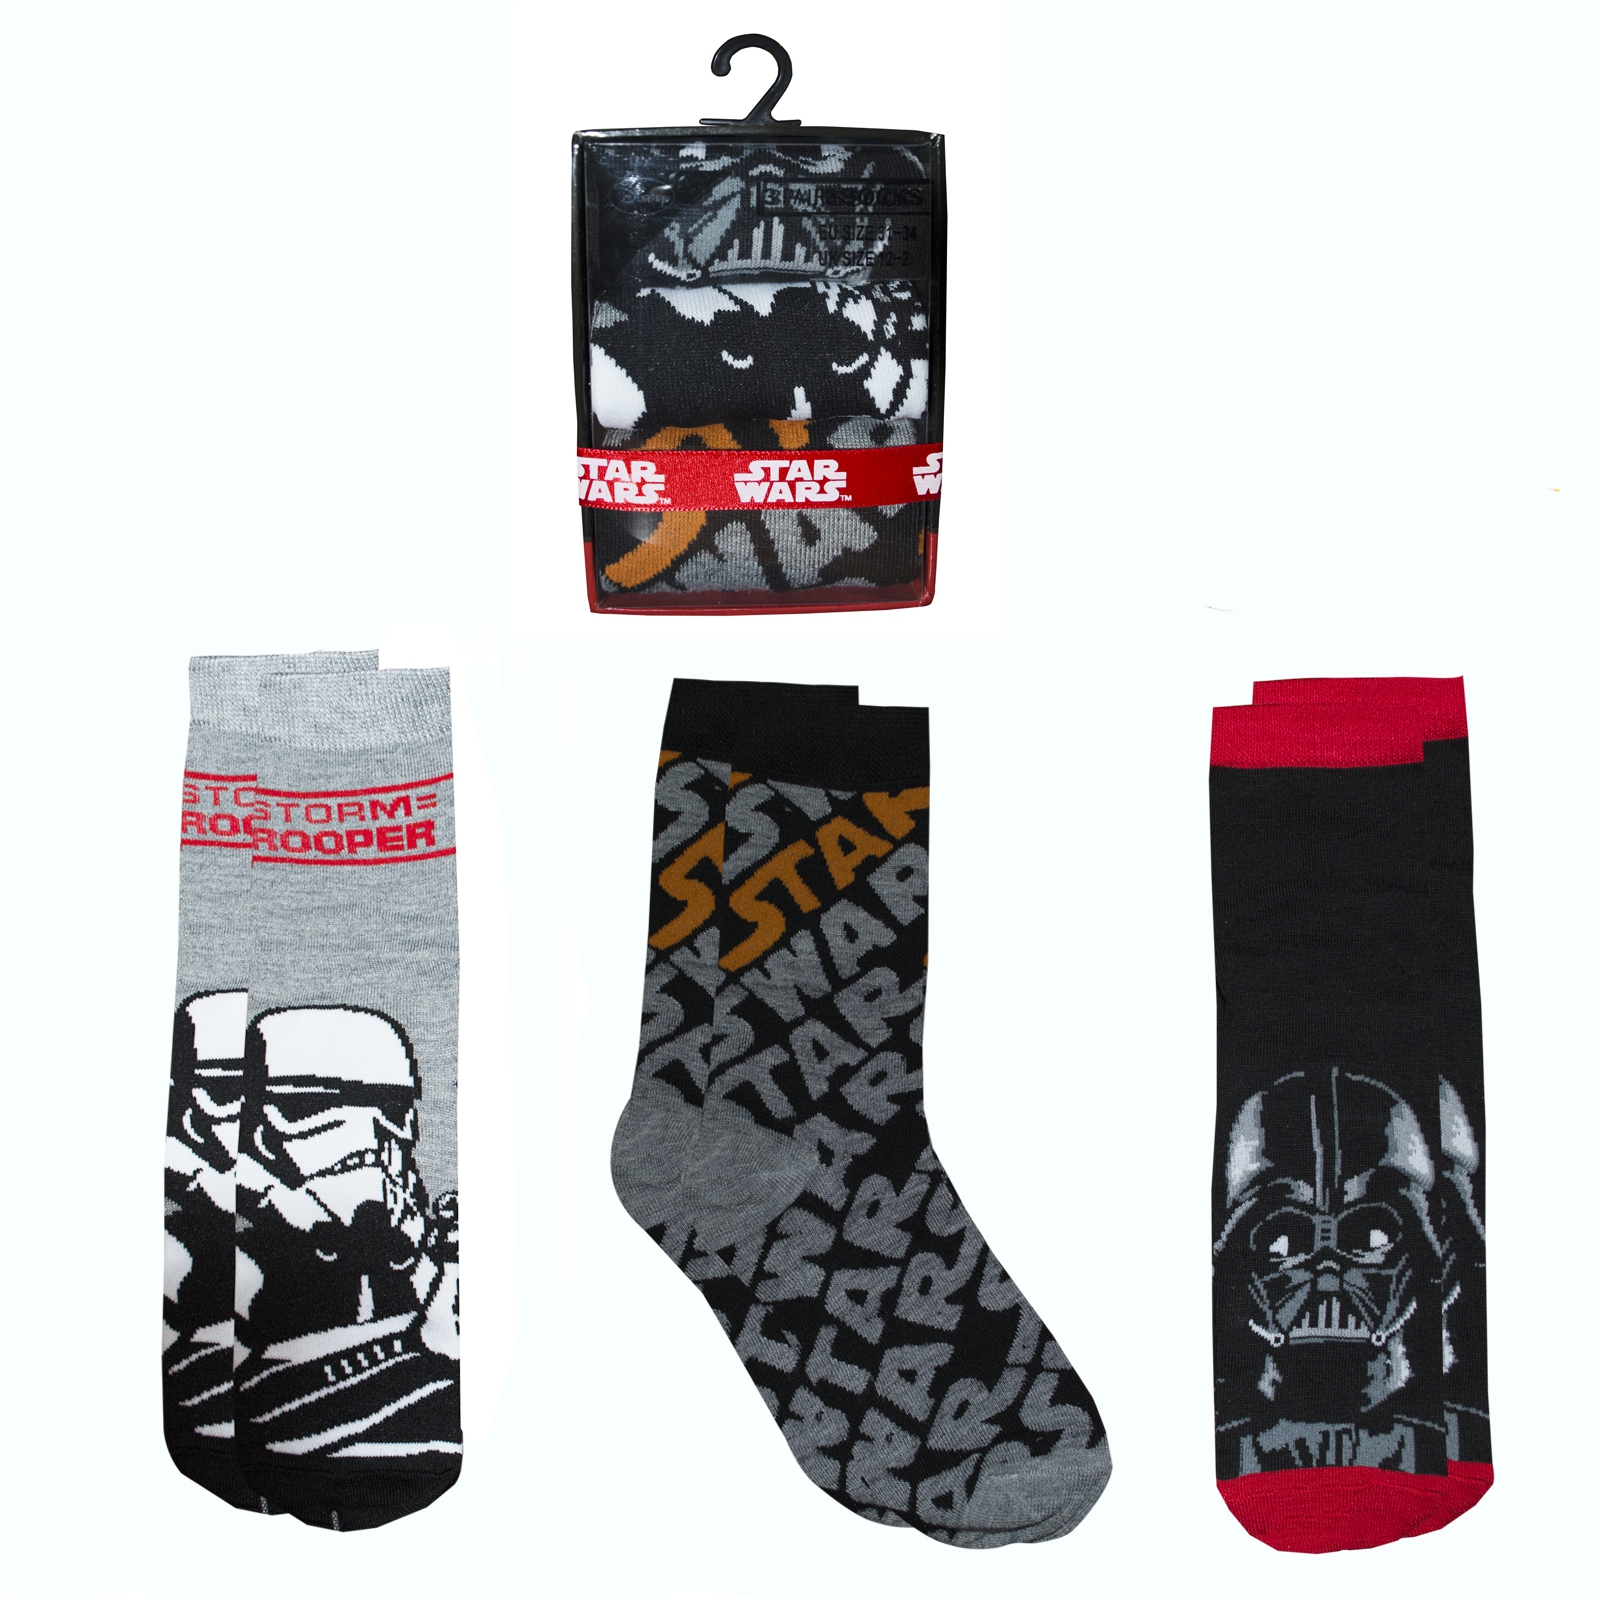 Disney Star Wars 3 Pk Socks 6-8 Size